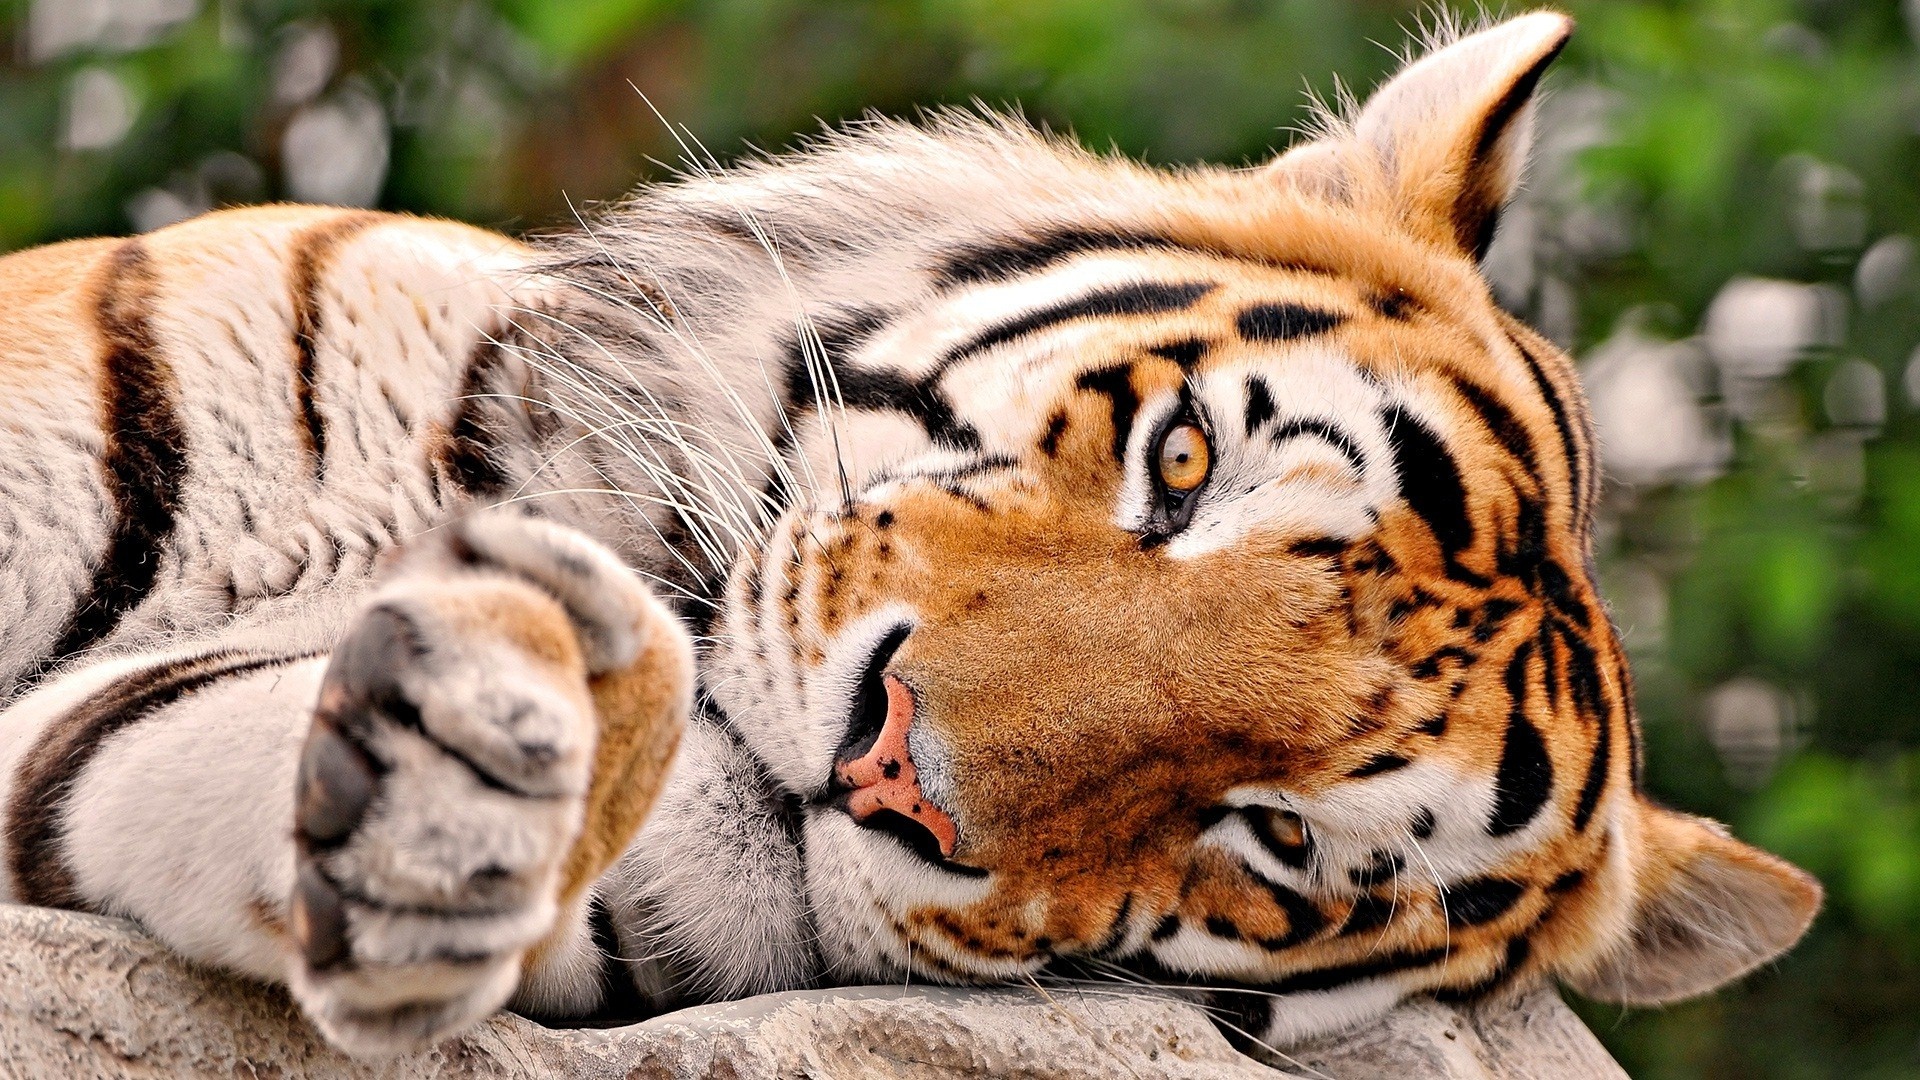 Jungle Animal, Tiger wallpaper, Thrilling KDE design, Fierce and fearless, 1920x1080 Full HD Desktop